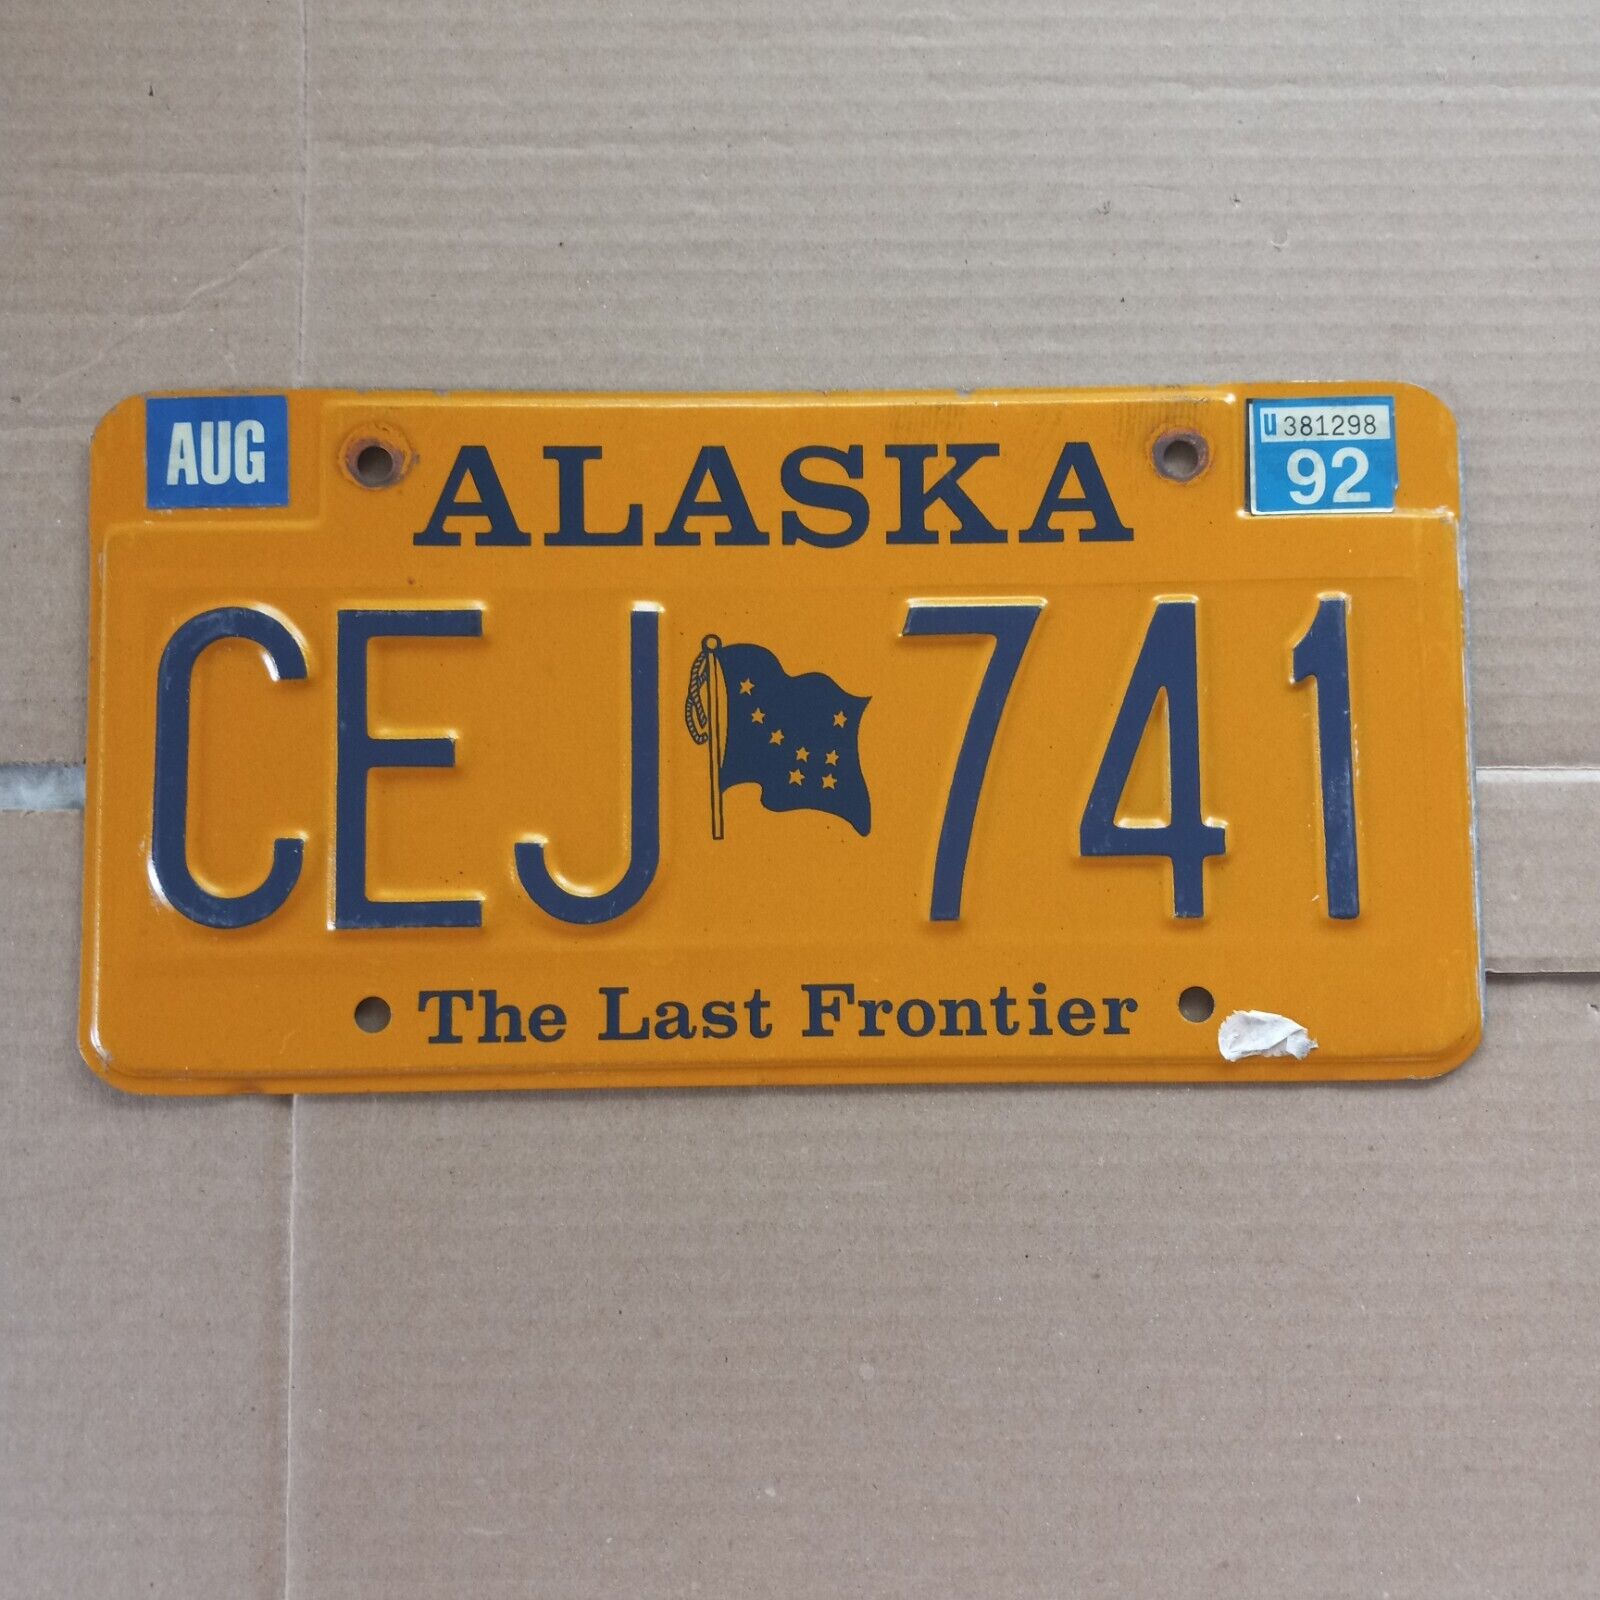 1992 Alaska License Plate - "cej 741" (navy On Gold) Aug 92 Stickers